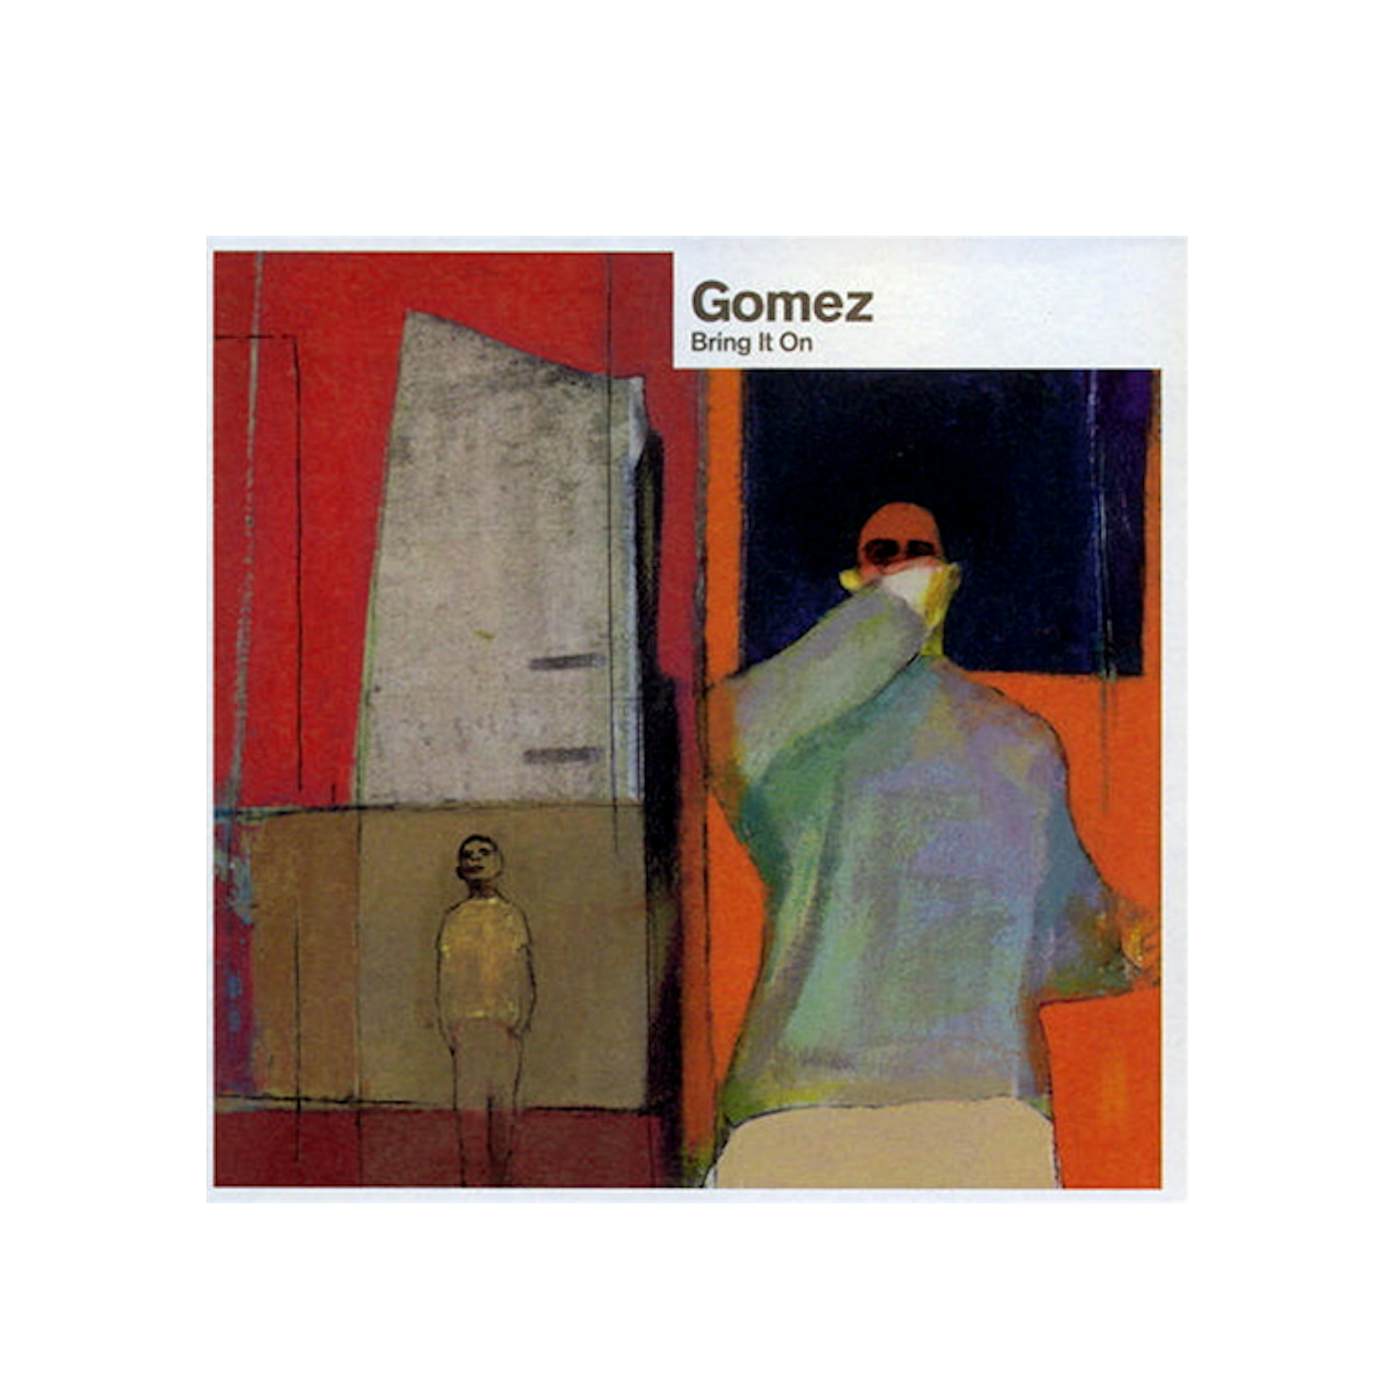 Gomez "Bring it On" CD